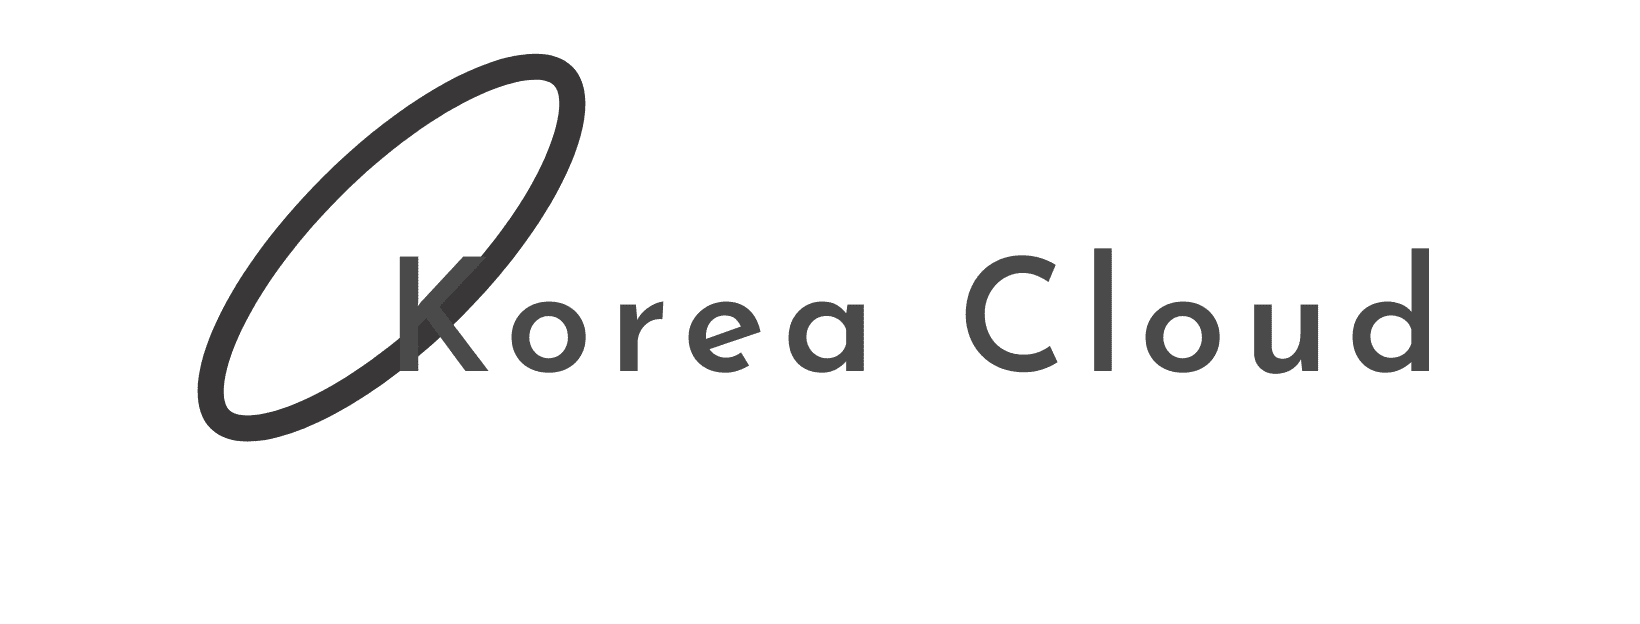 Korea cloud